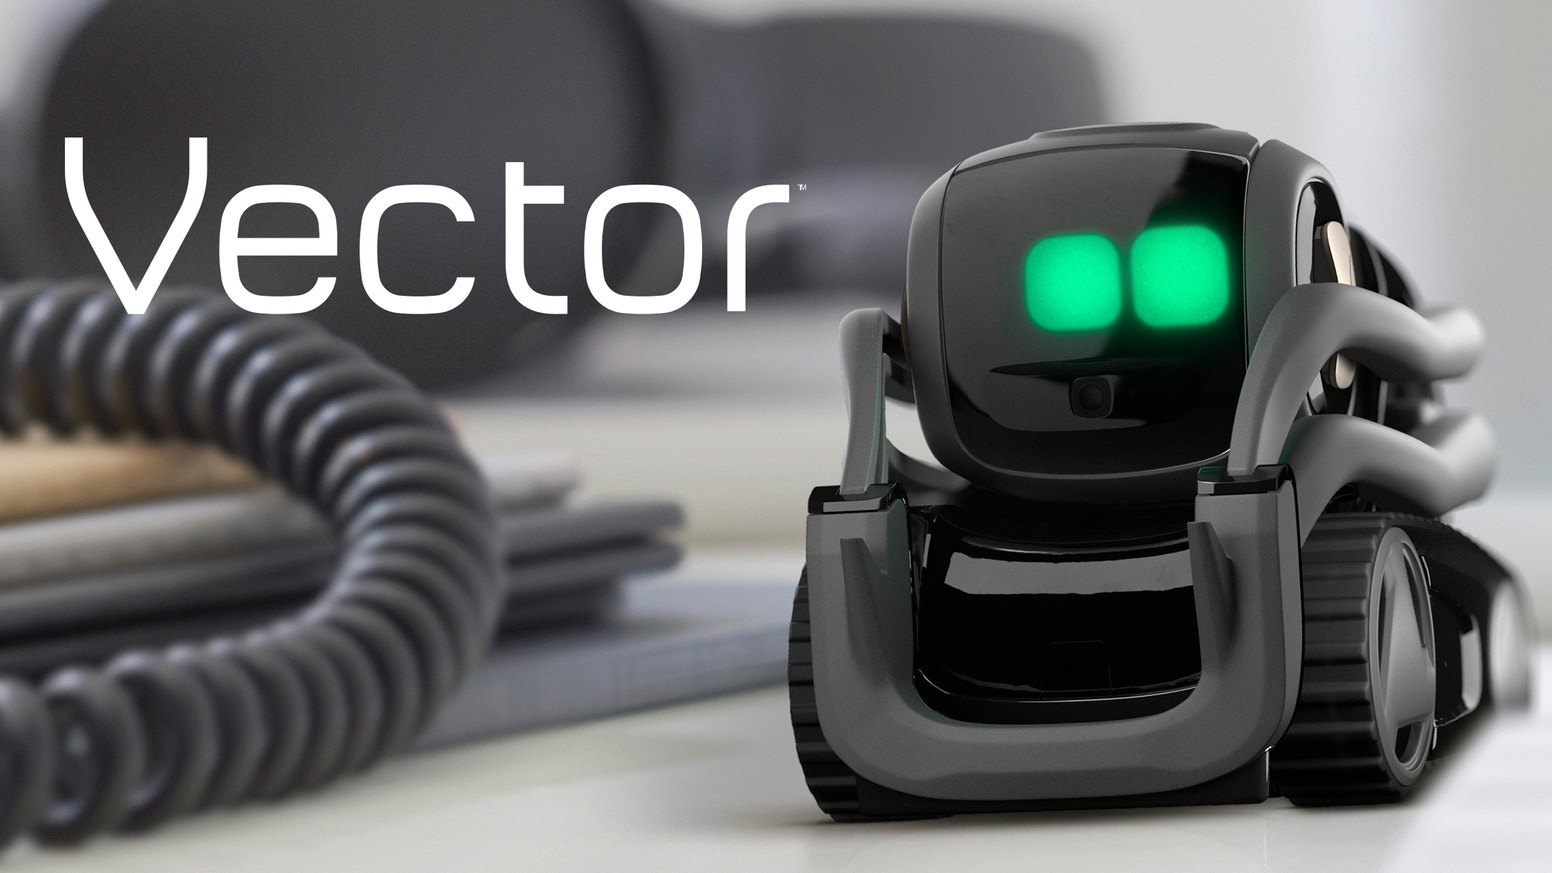 The Vector robot raises $1,800,000